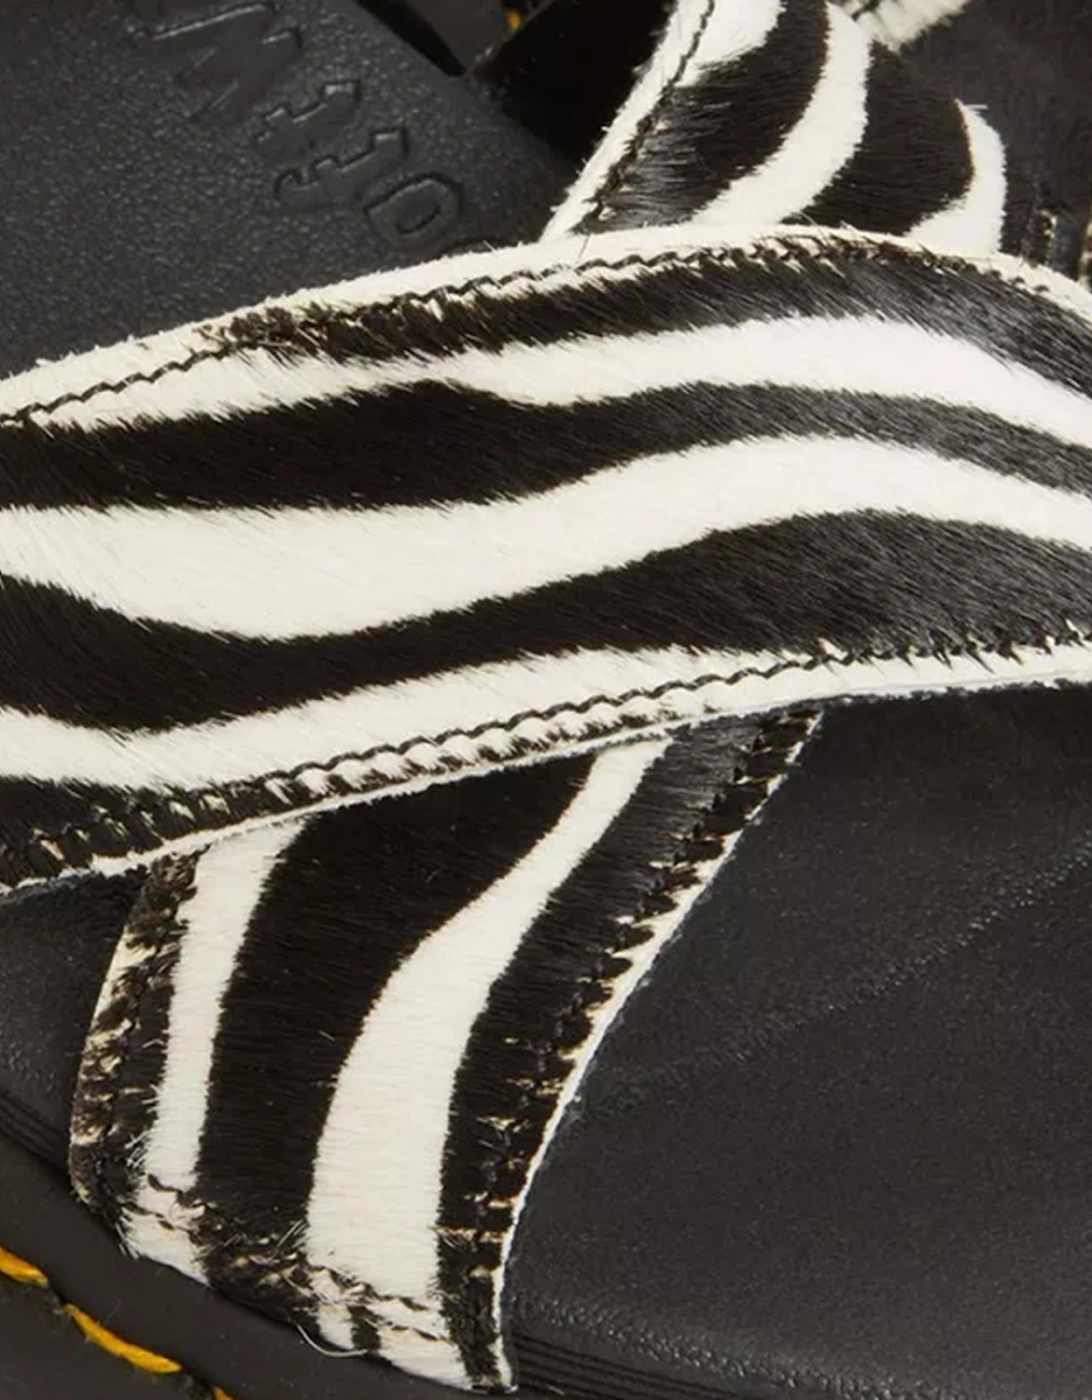 Womens Voss II Zebra Sandals (Black)